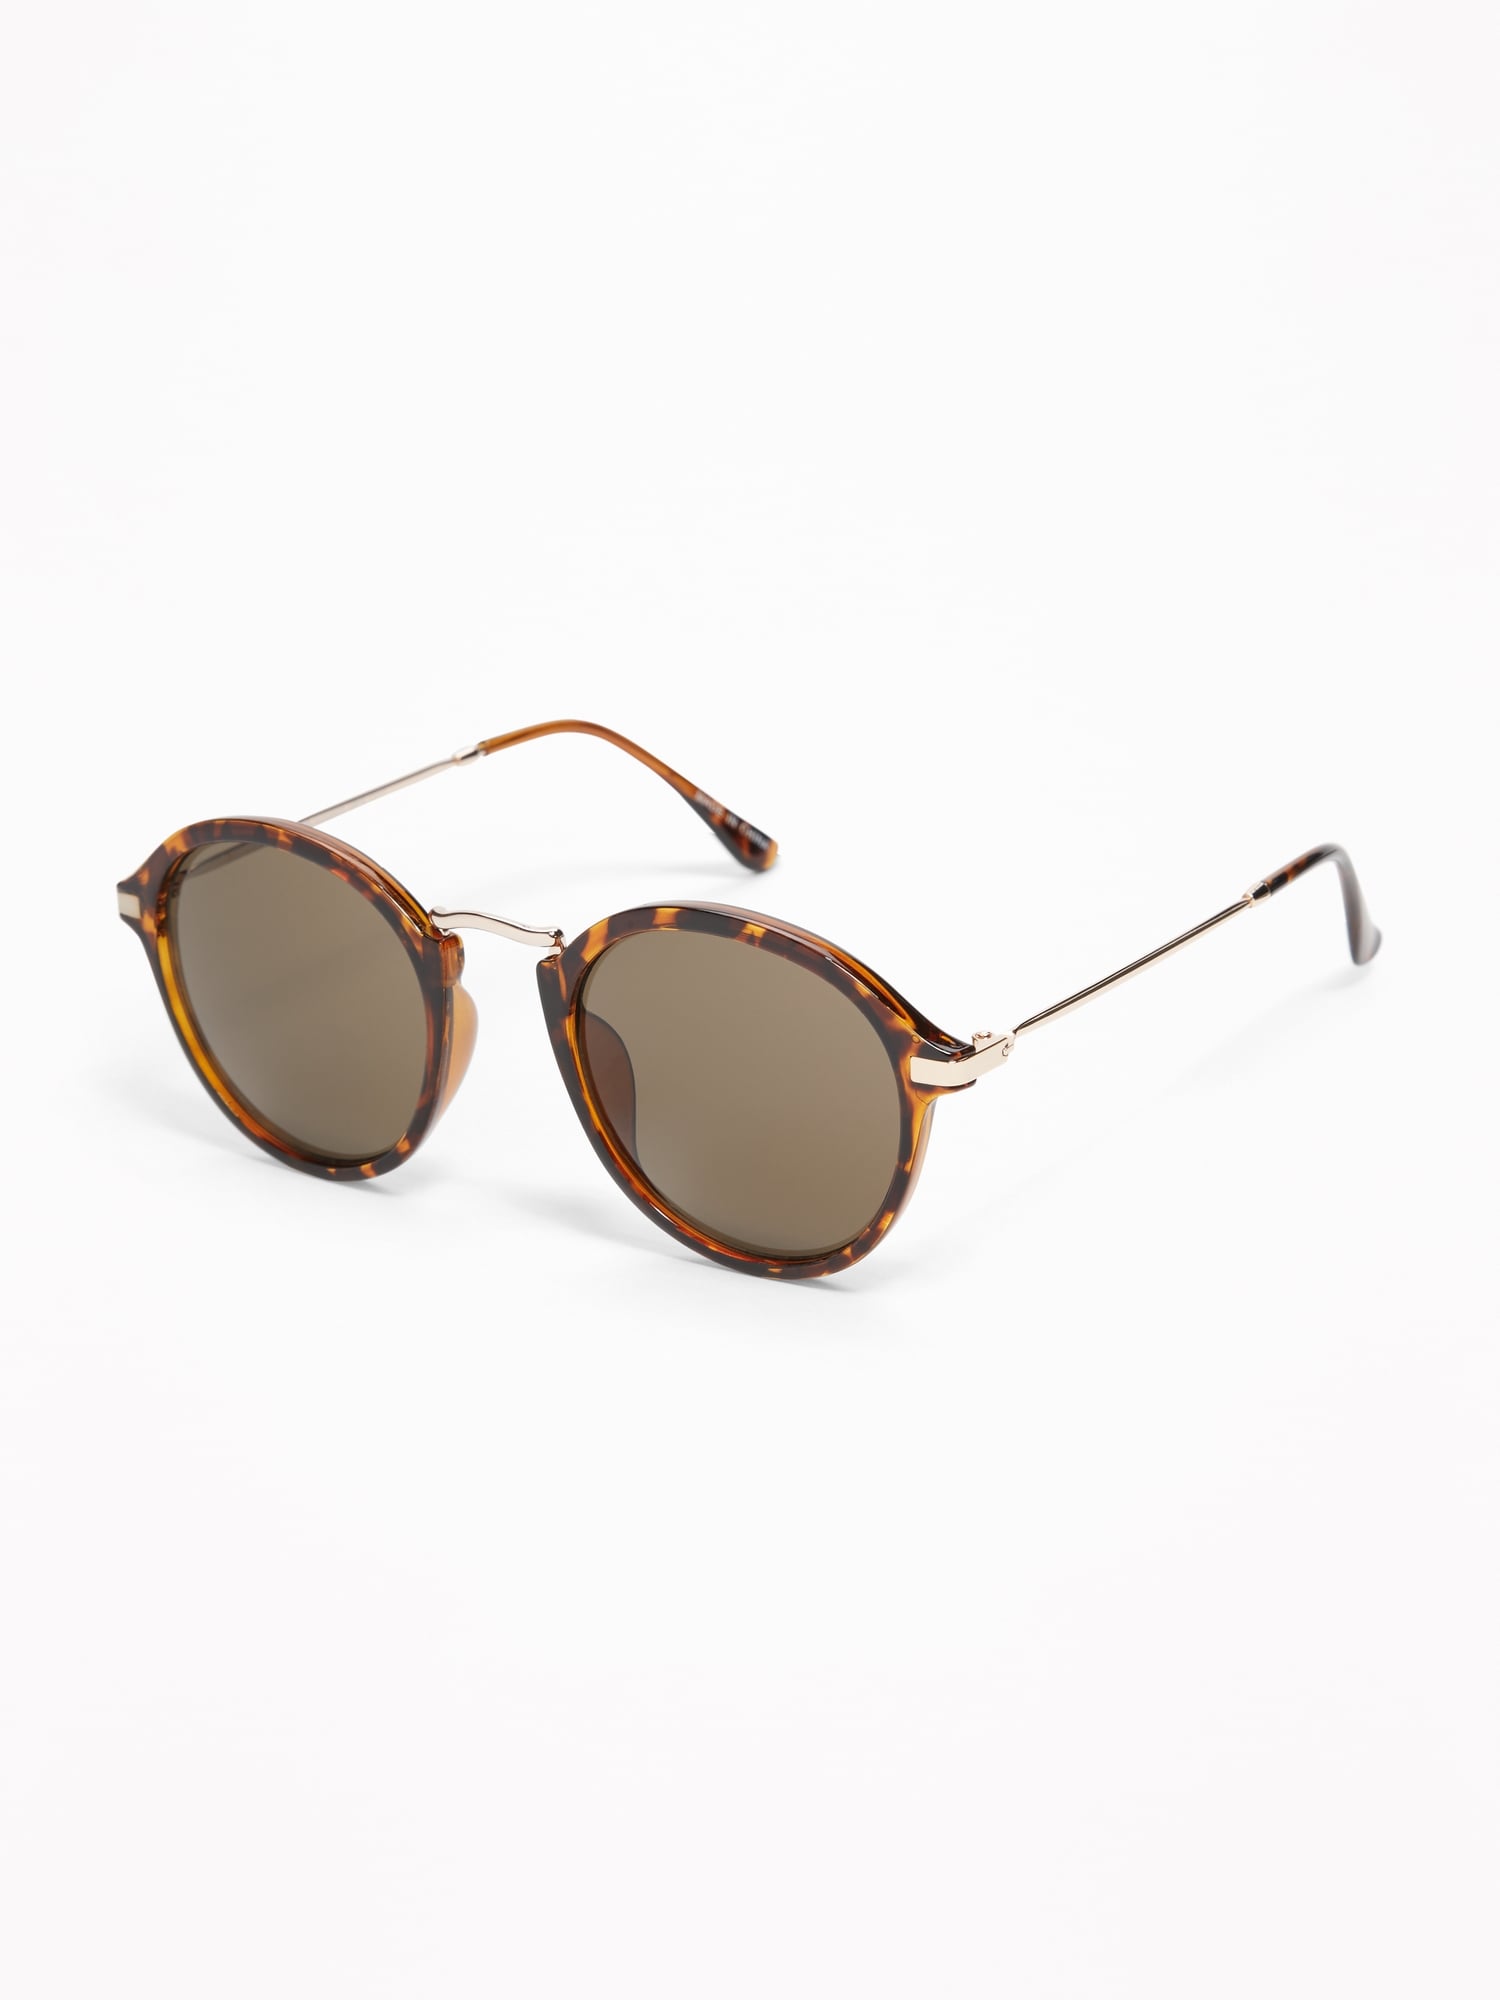 Best Sunglasses For Women From Old Navy | POPSUGAR Fashion UK